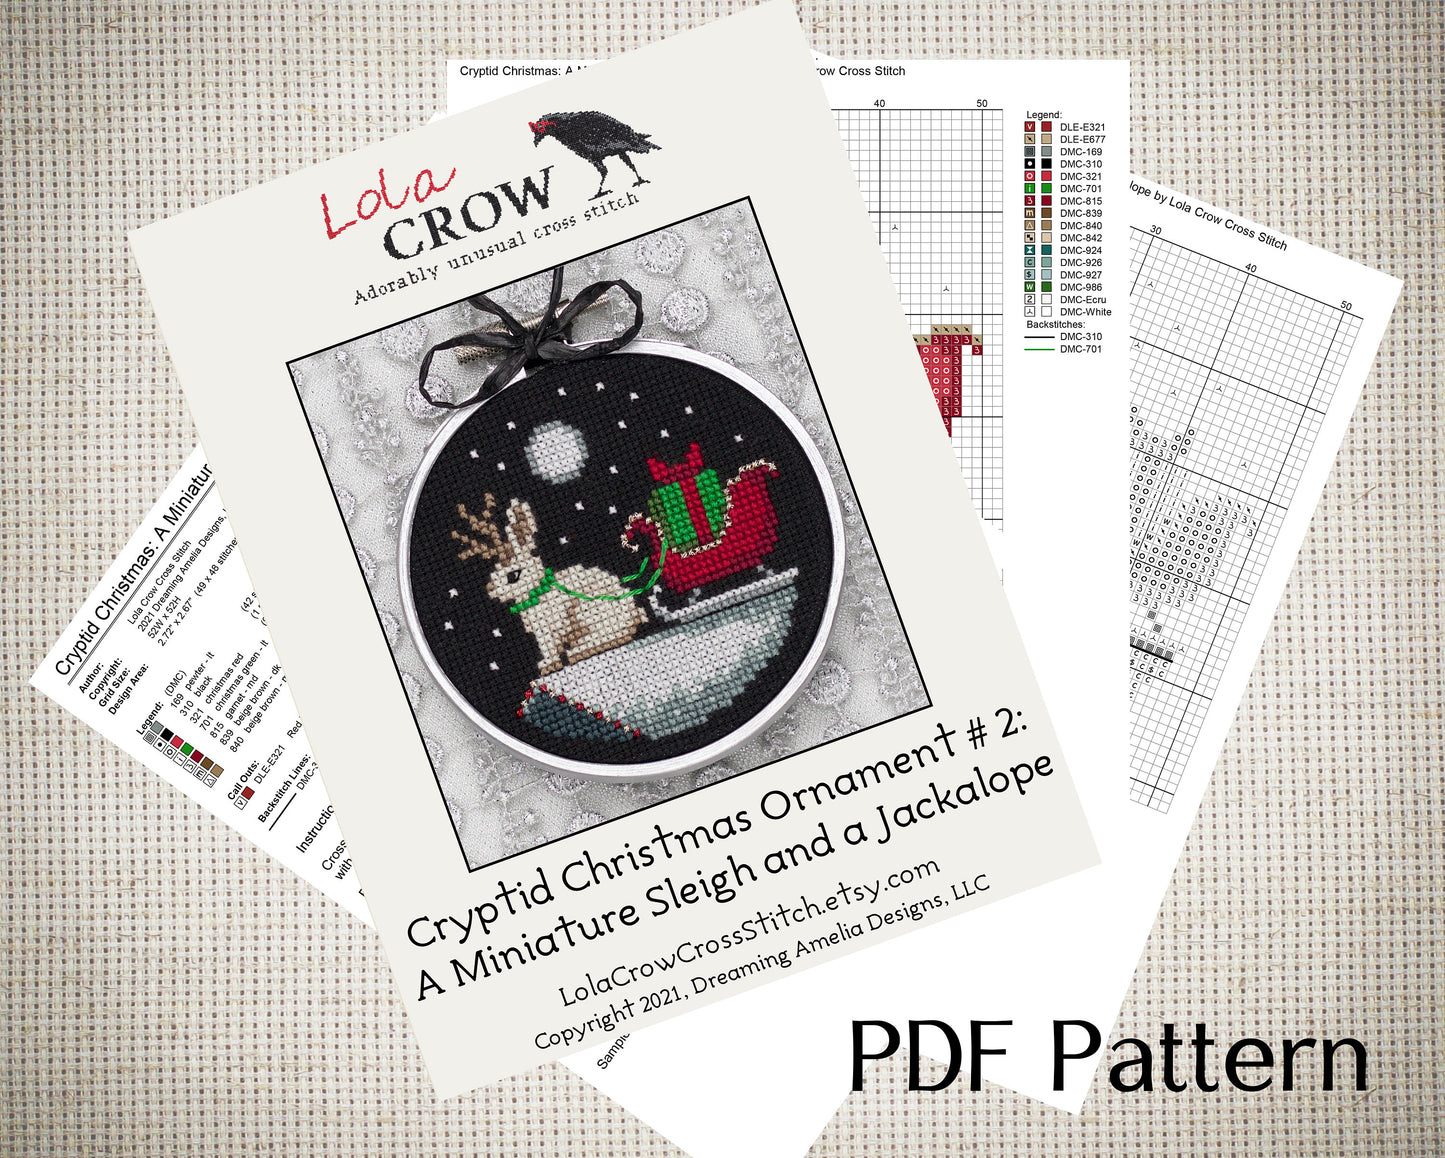 A Miniature Sleigh and a Jackalope - Digital PDF Cross Stitch Pattern